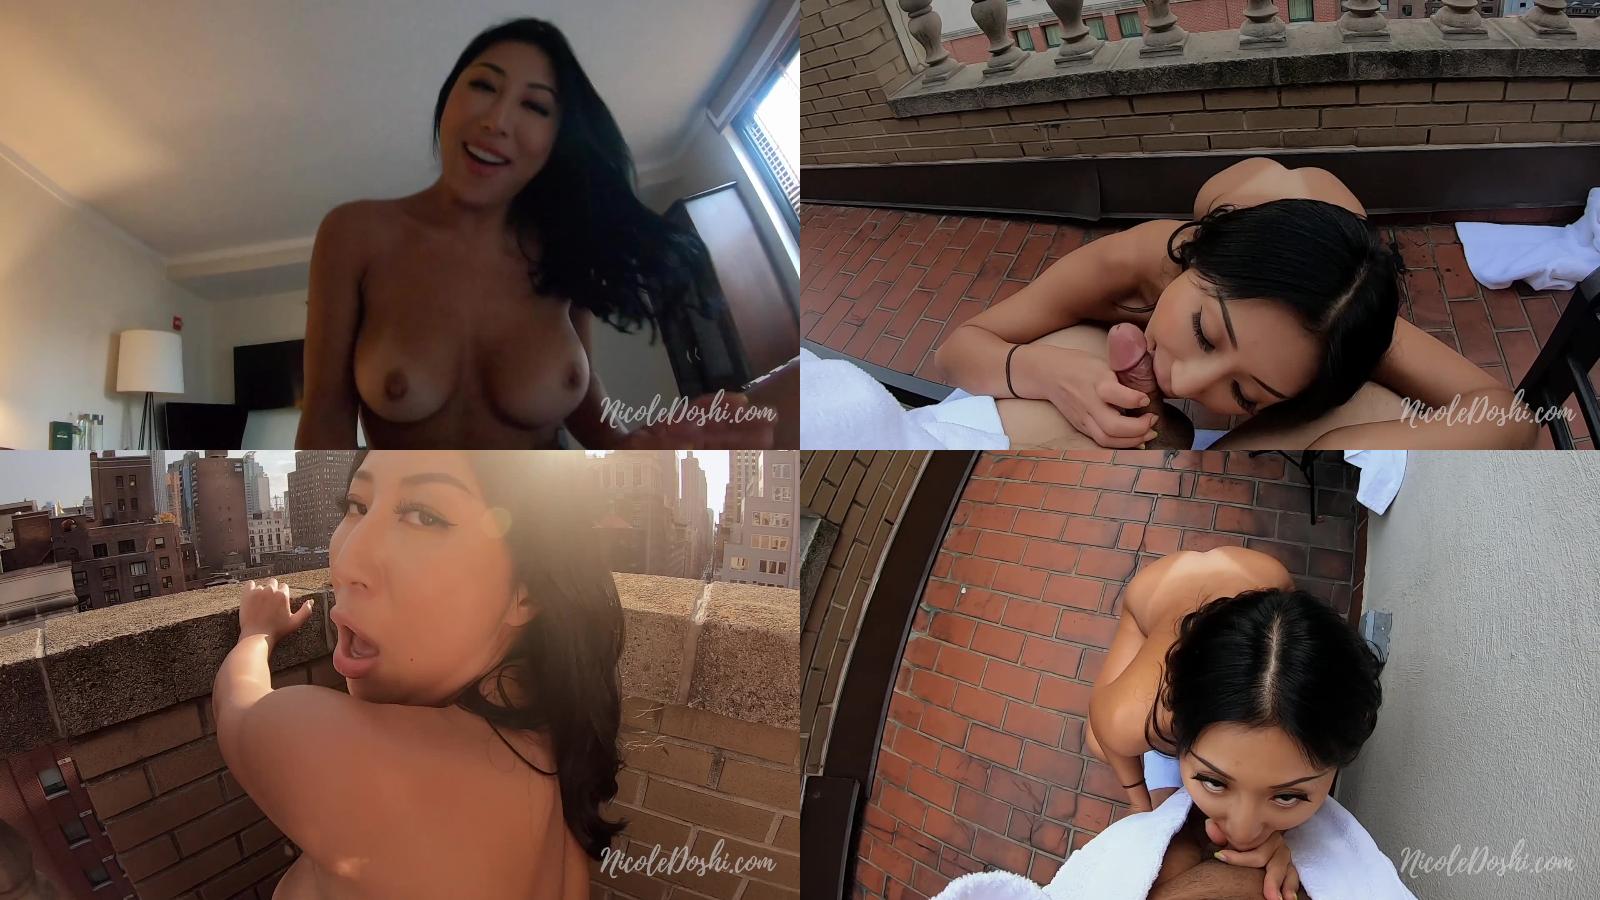 Nicole Doshi Chinese Girl Fucking In Public – POV